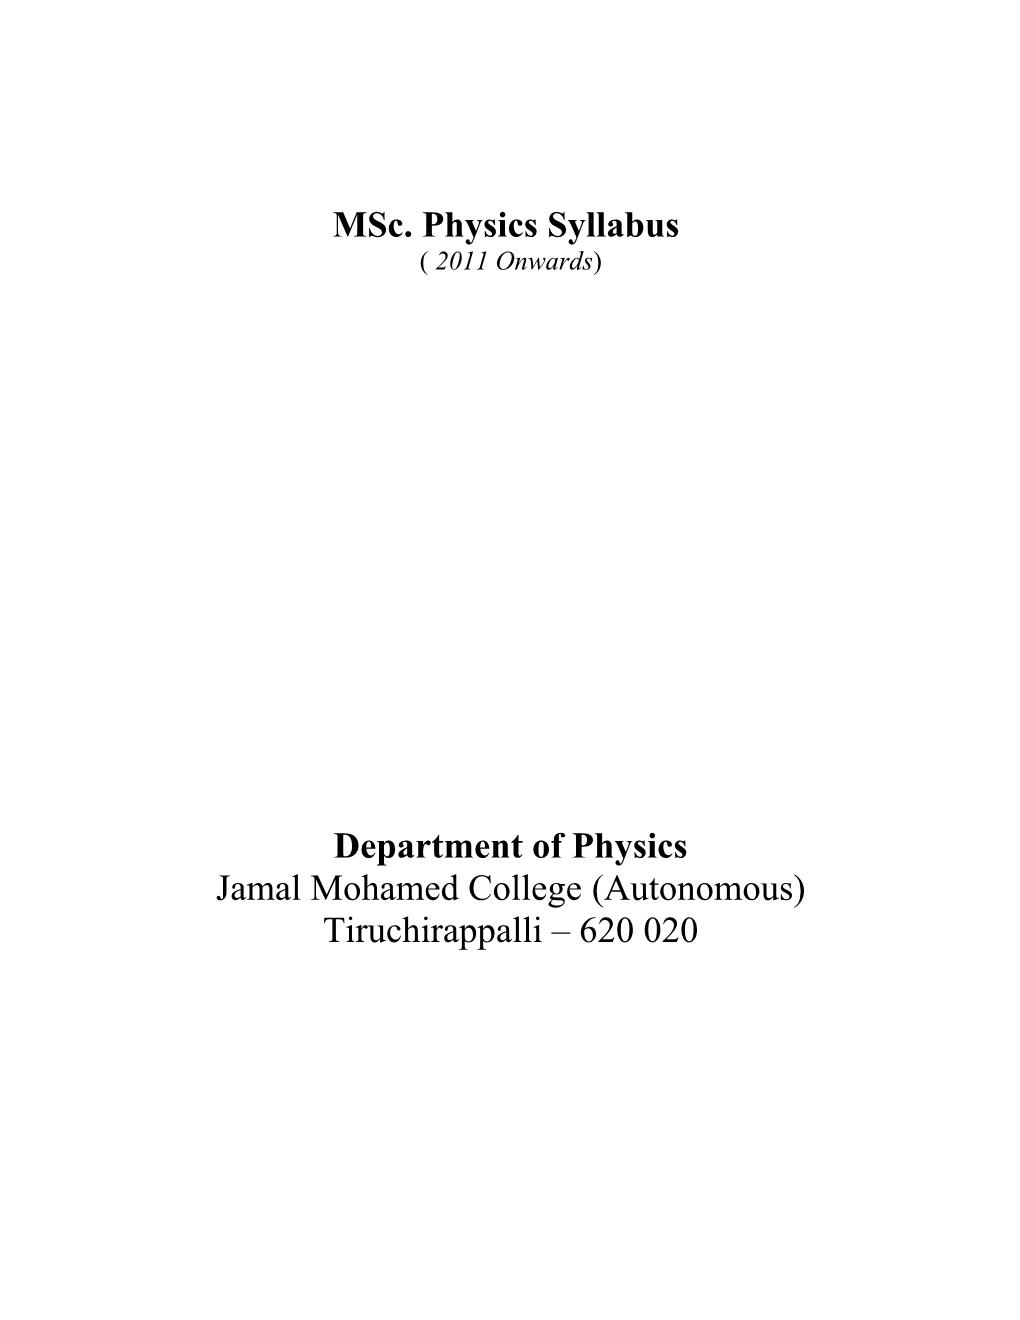 Msc. Physics Syllabus